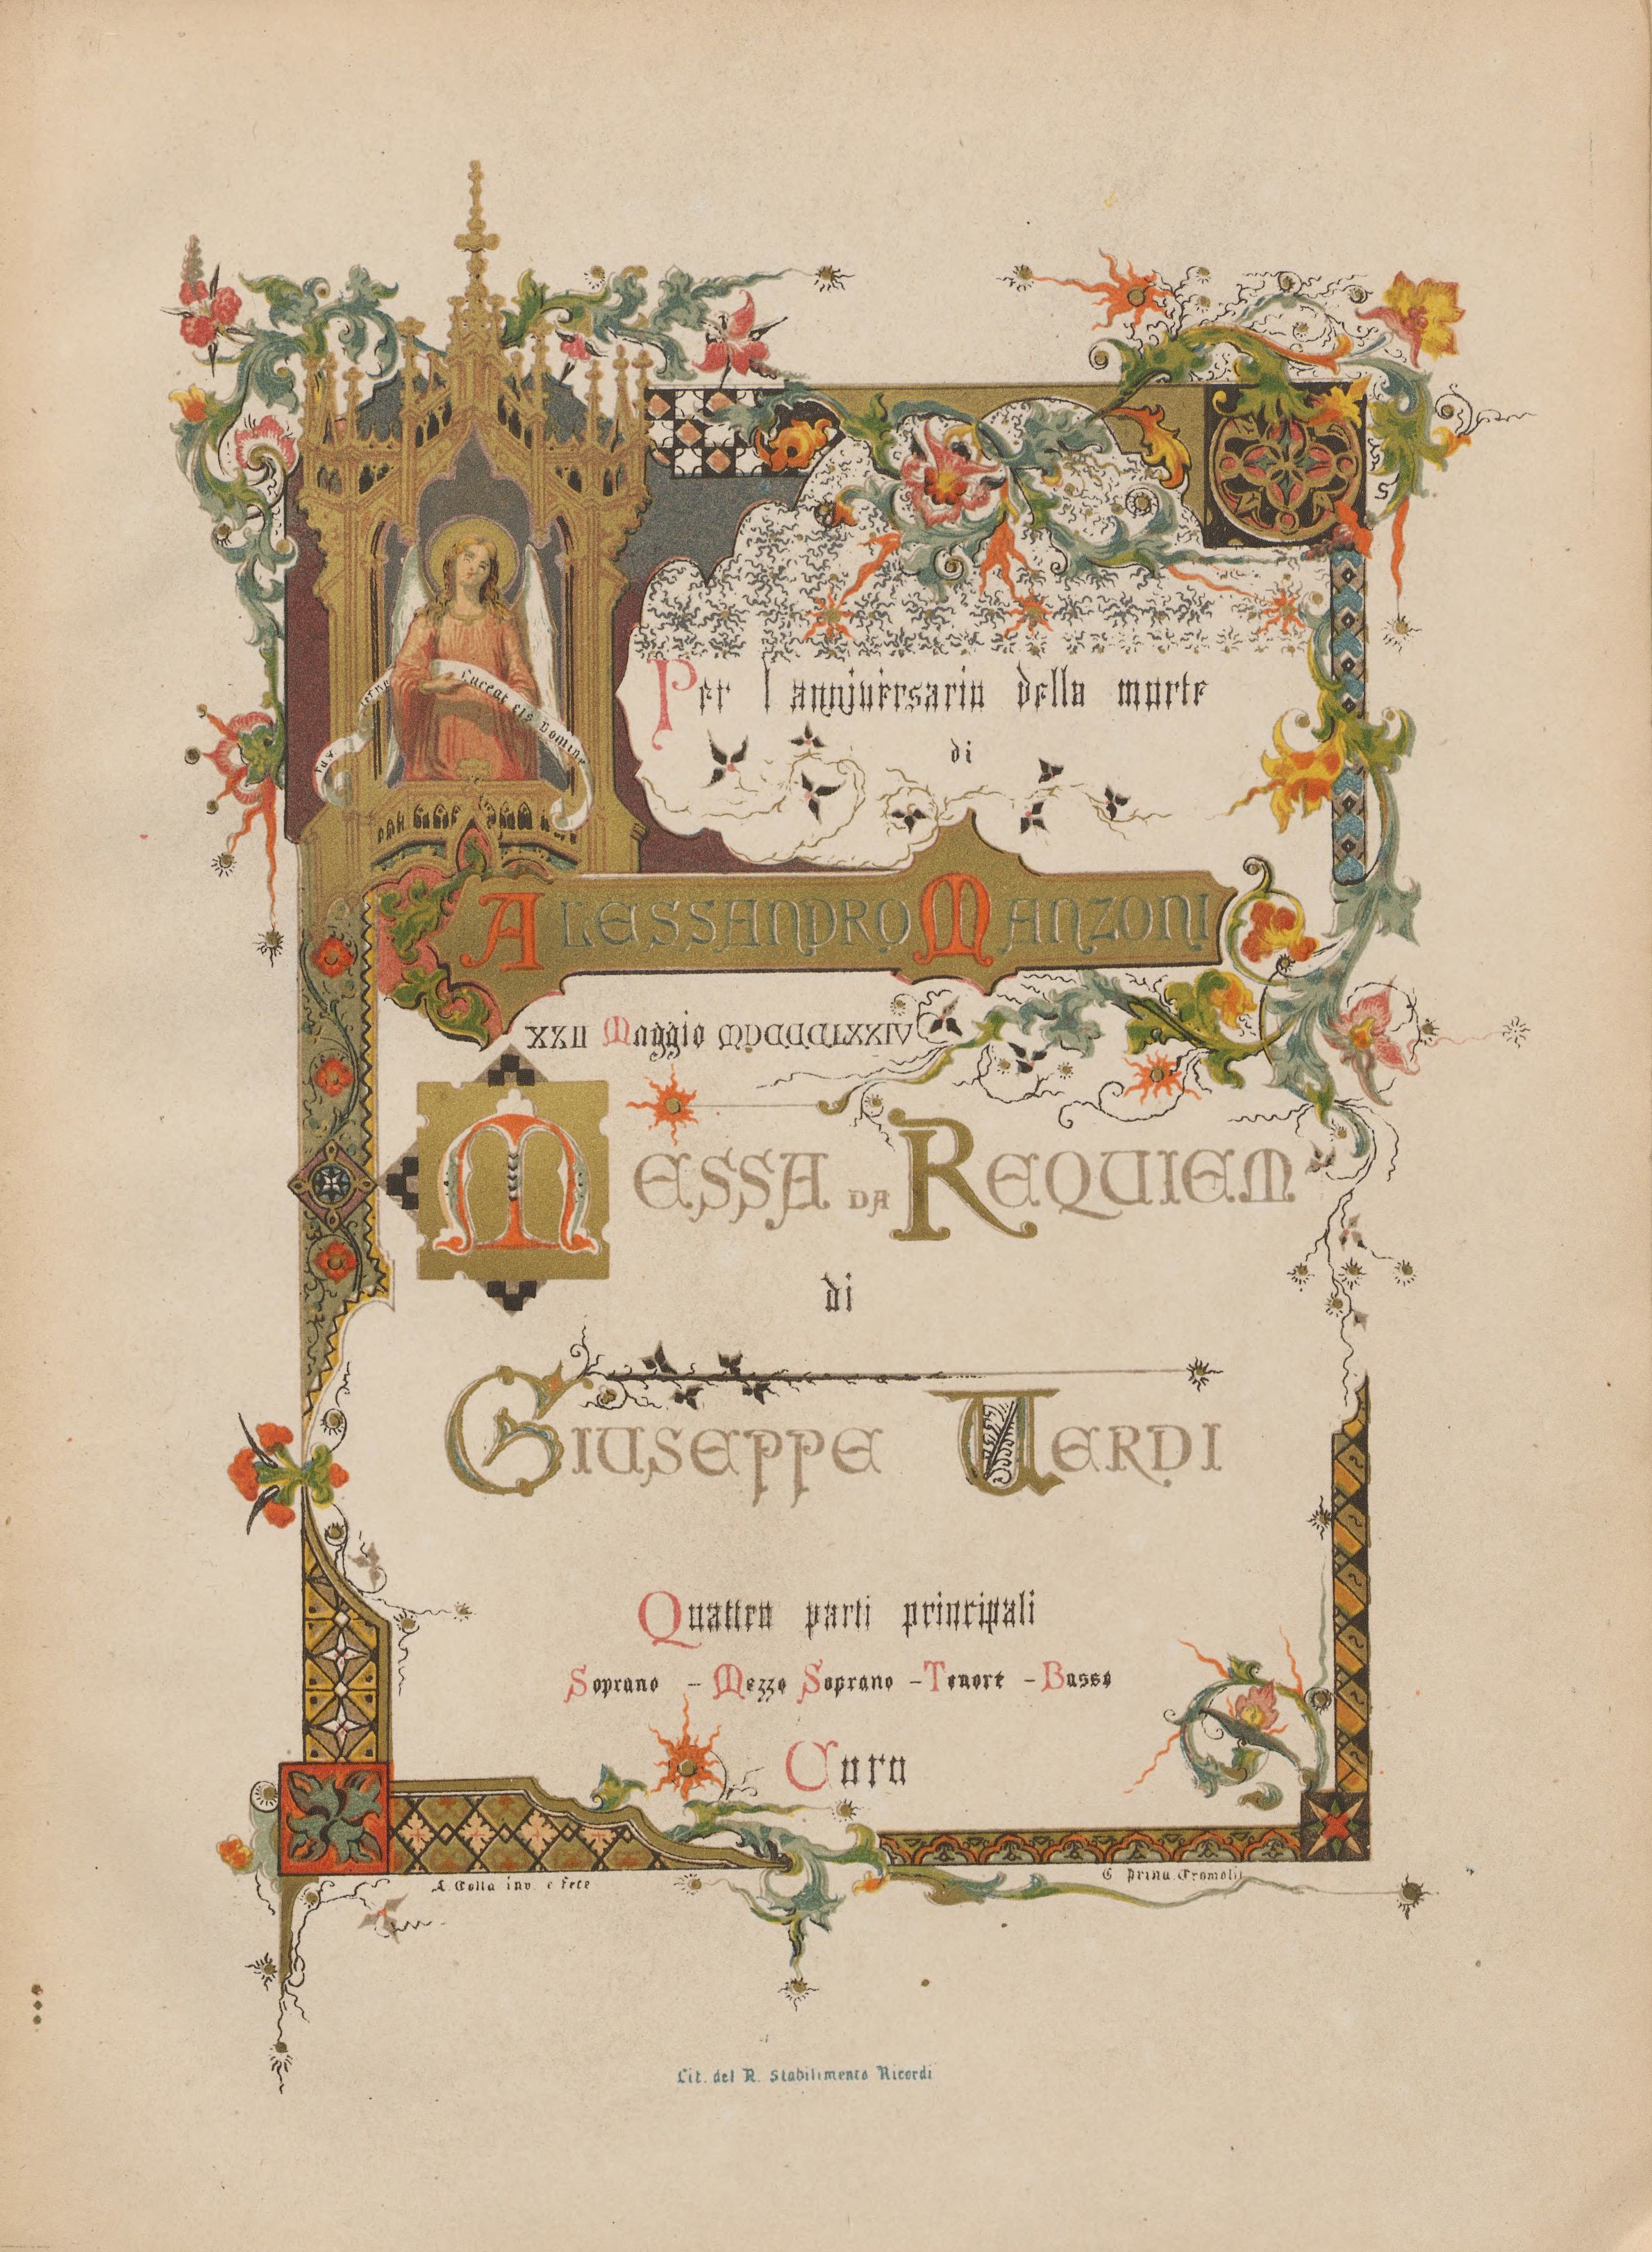 Messa da Requiem - vocal score from Giuseppe Verdi, 1874. Harvard University Library (public domain).